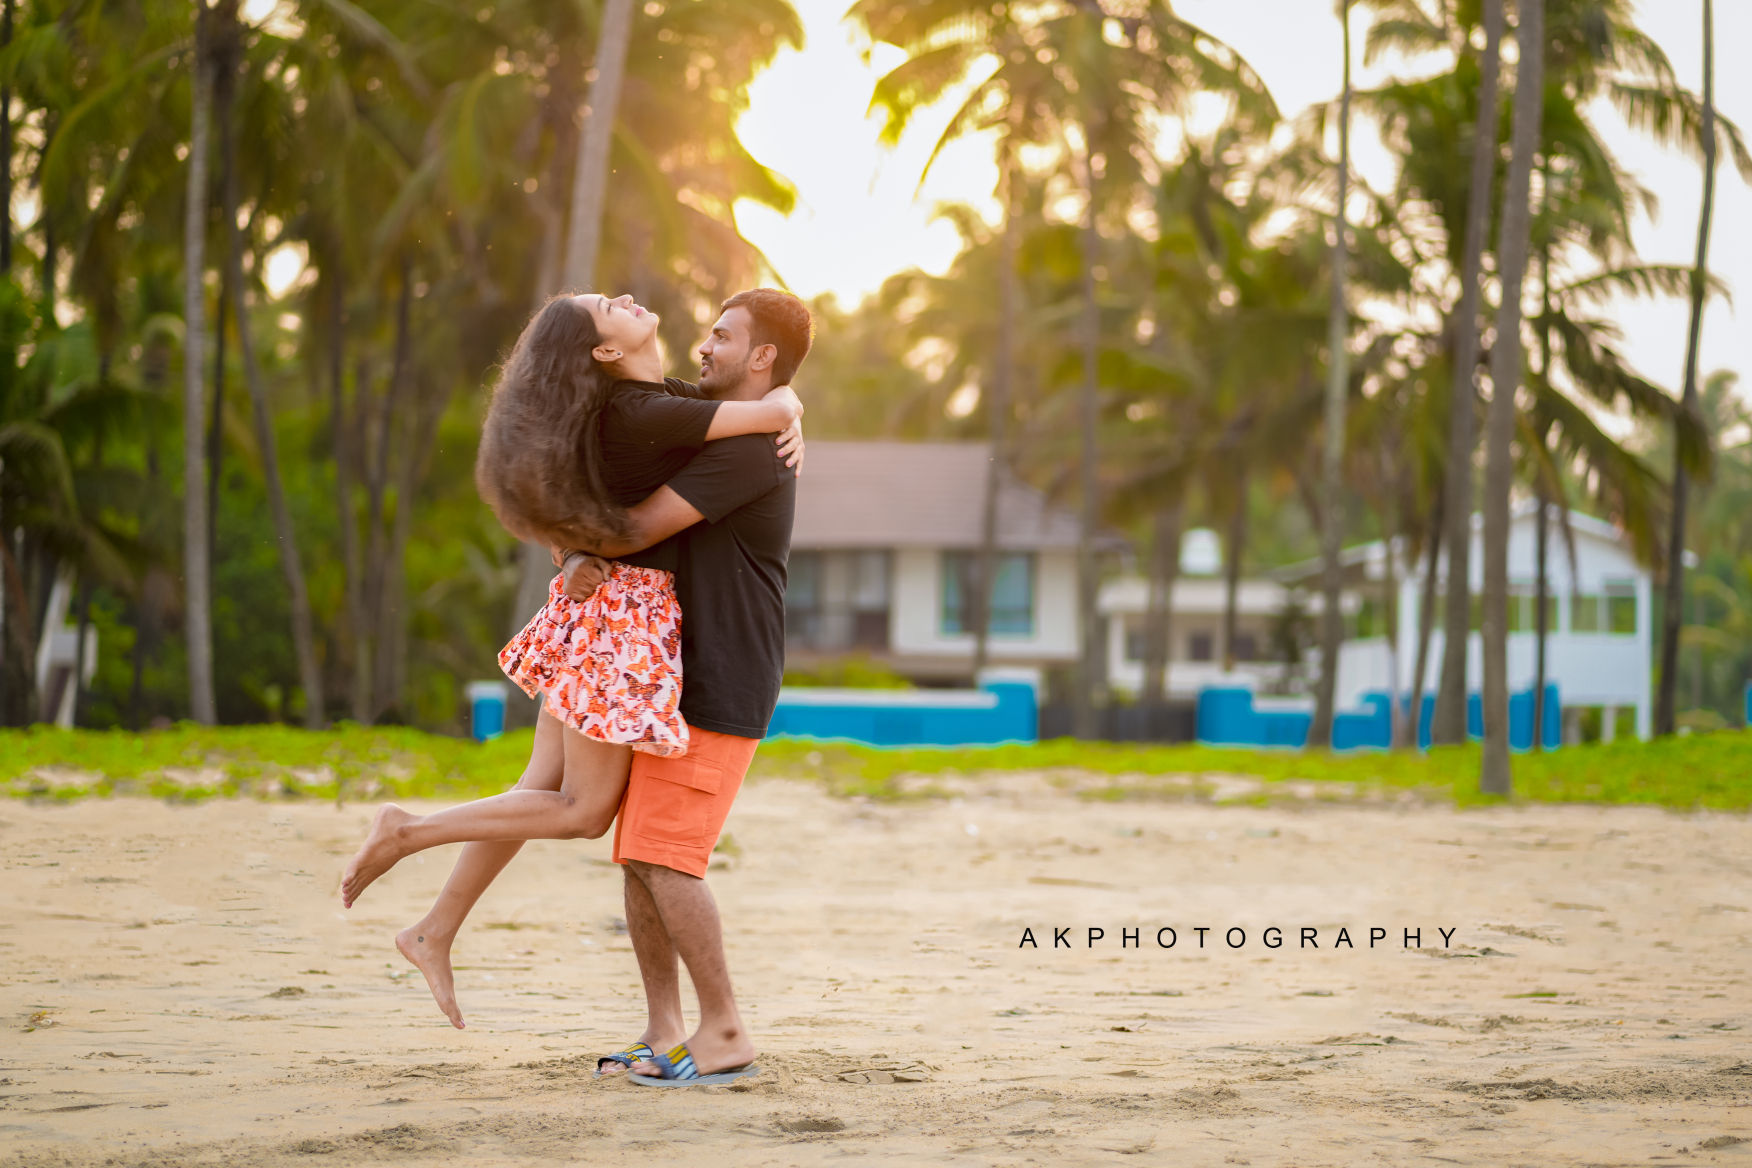 Capture Your Love: Pre-Wedding Photoshoot in Kerala with AK Photography Pre-Wedding Photoshoot Saranya & Seenu's Ethereal Pre-Wedding Photoshoot in Kerala AK Photography